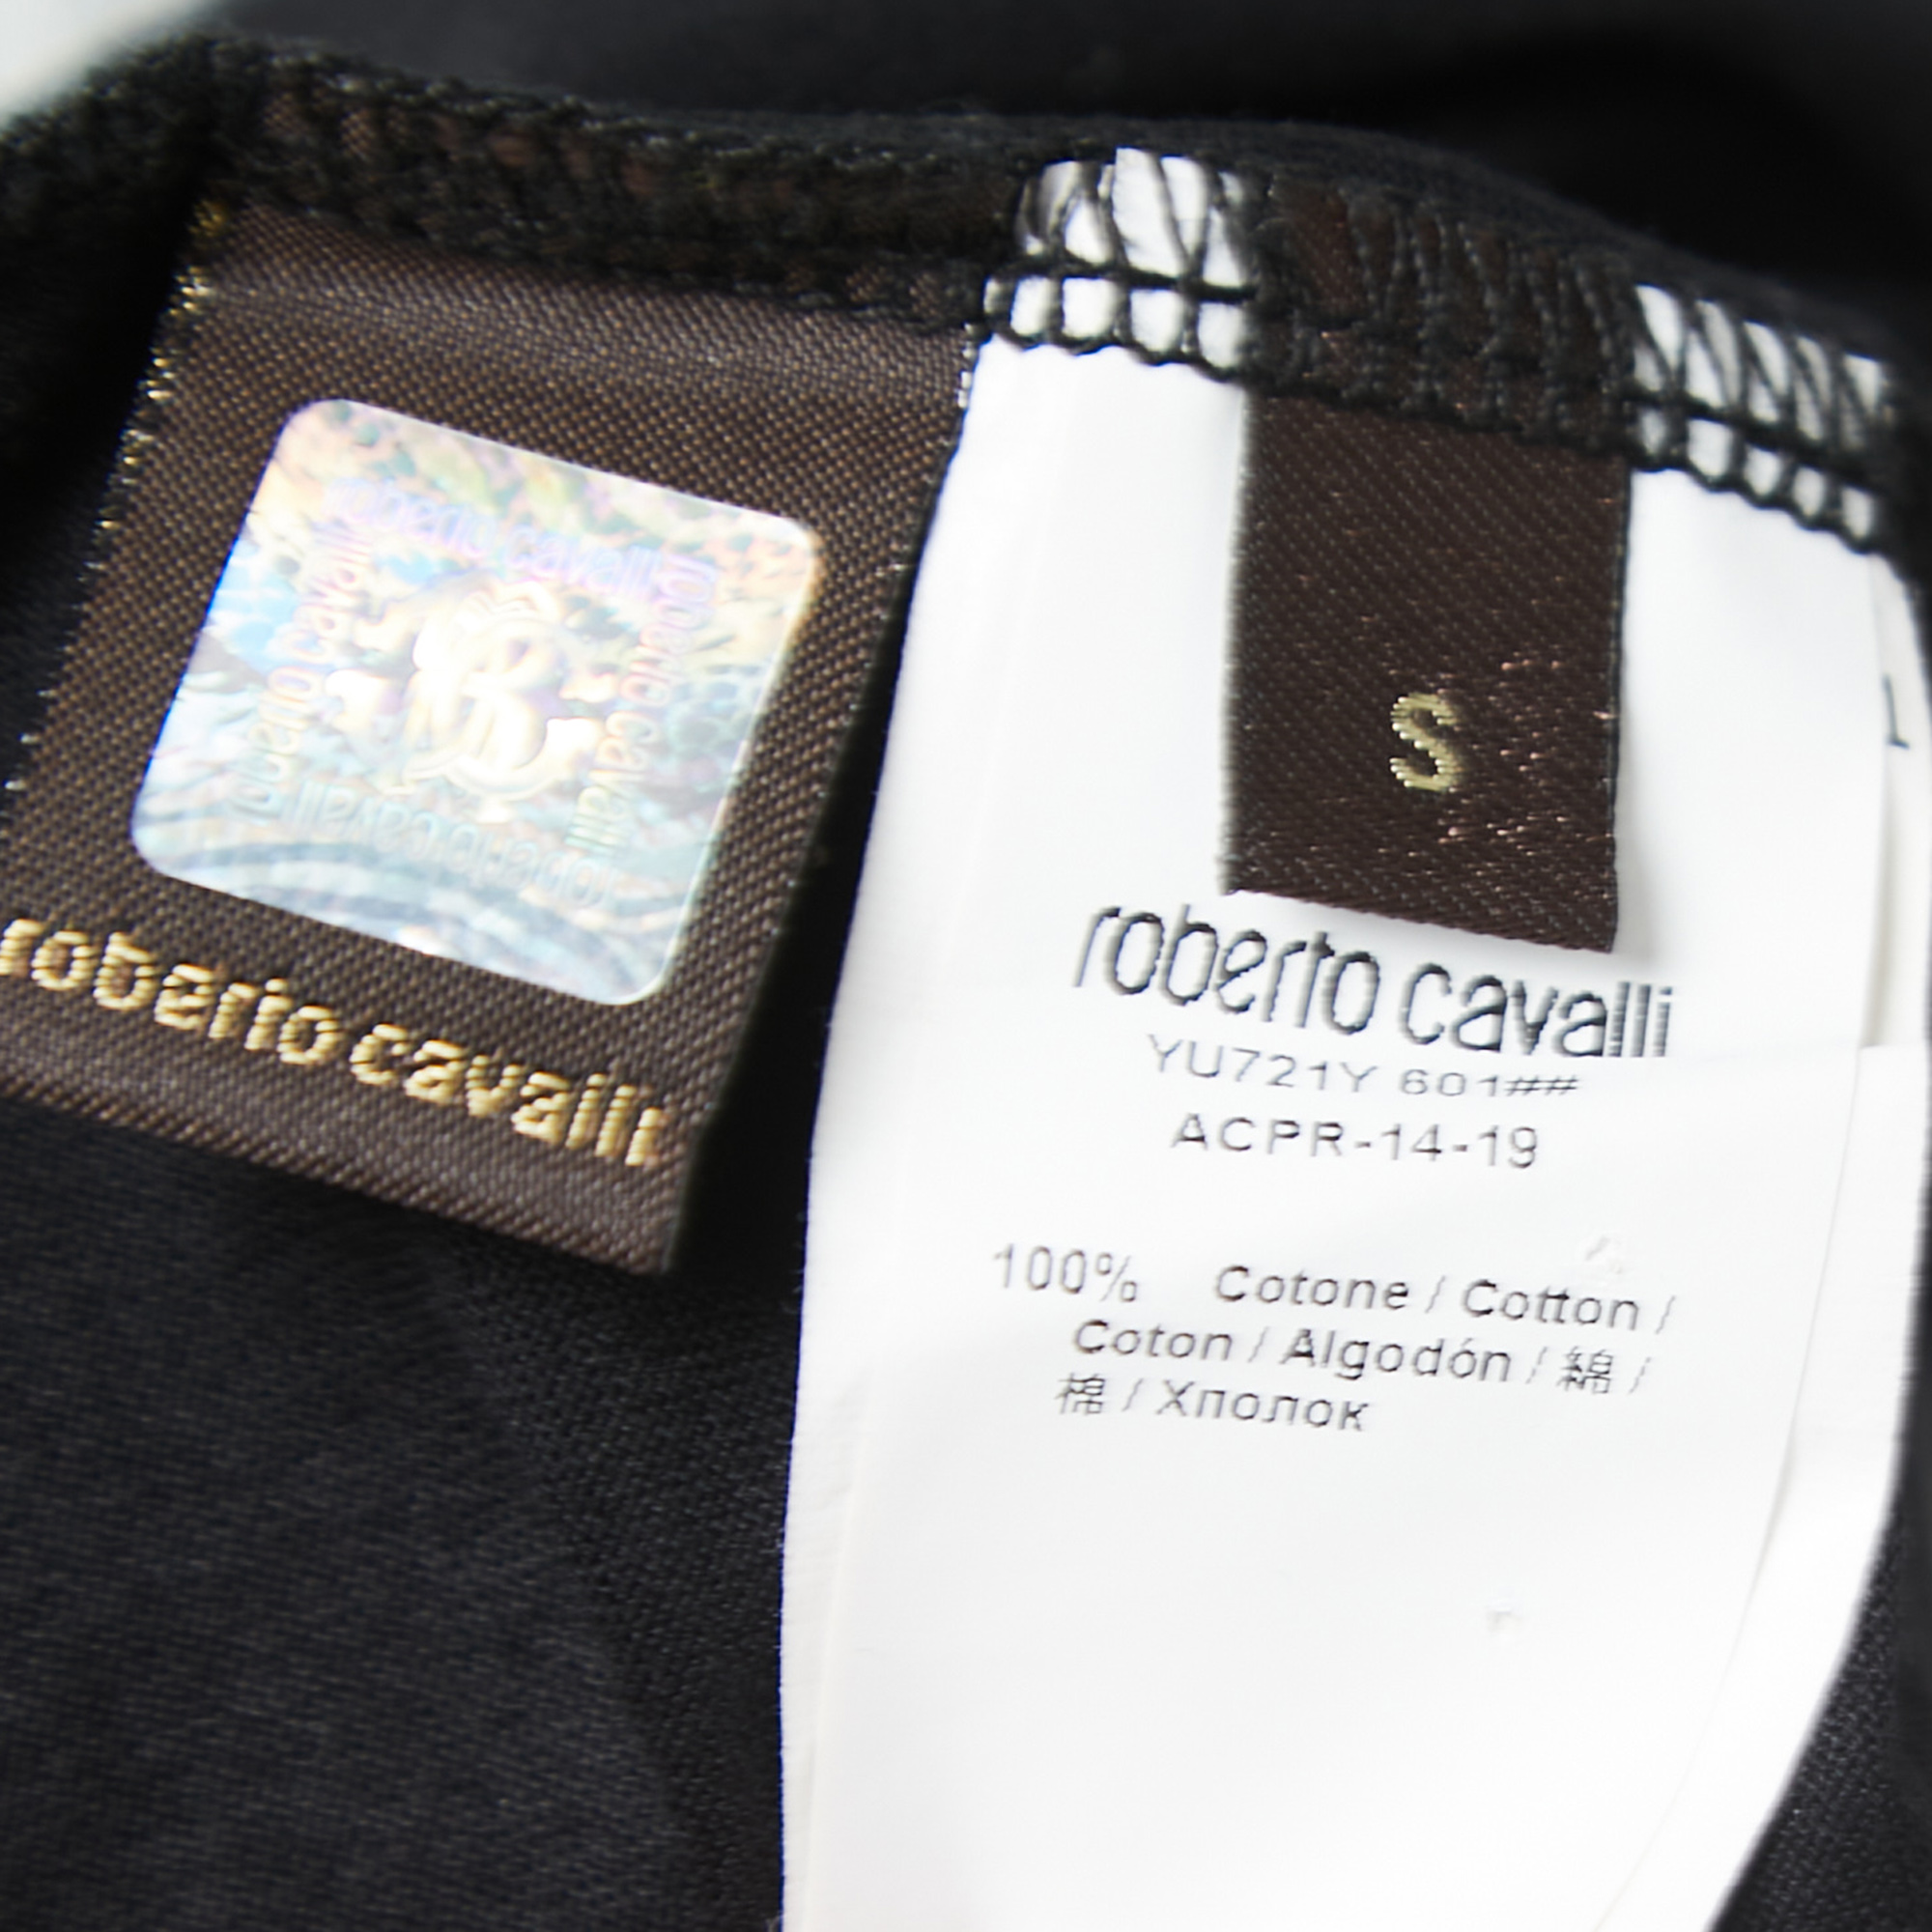 Roberto Cavalli Black Printed Cotton Full Sleeve T-Shirt S